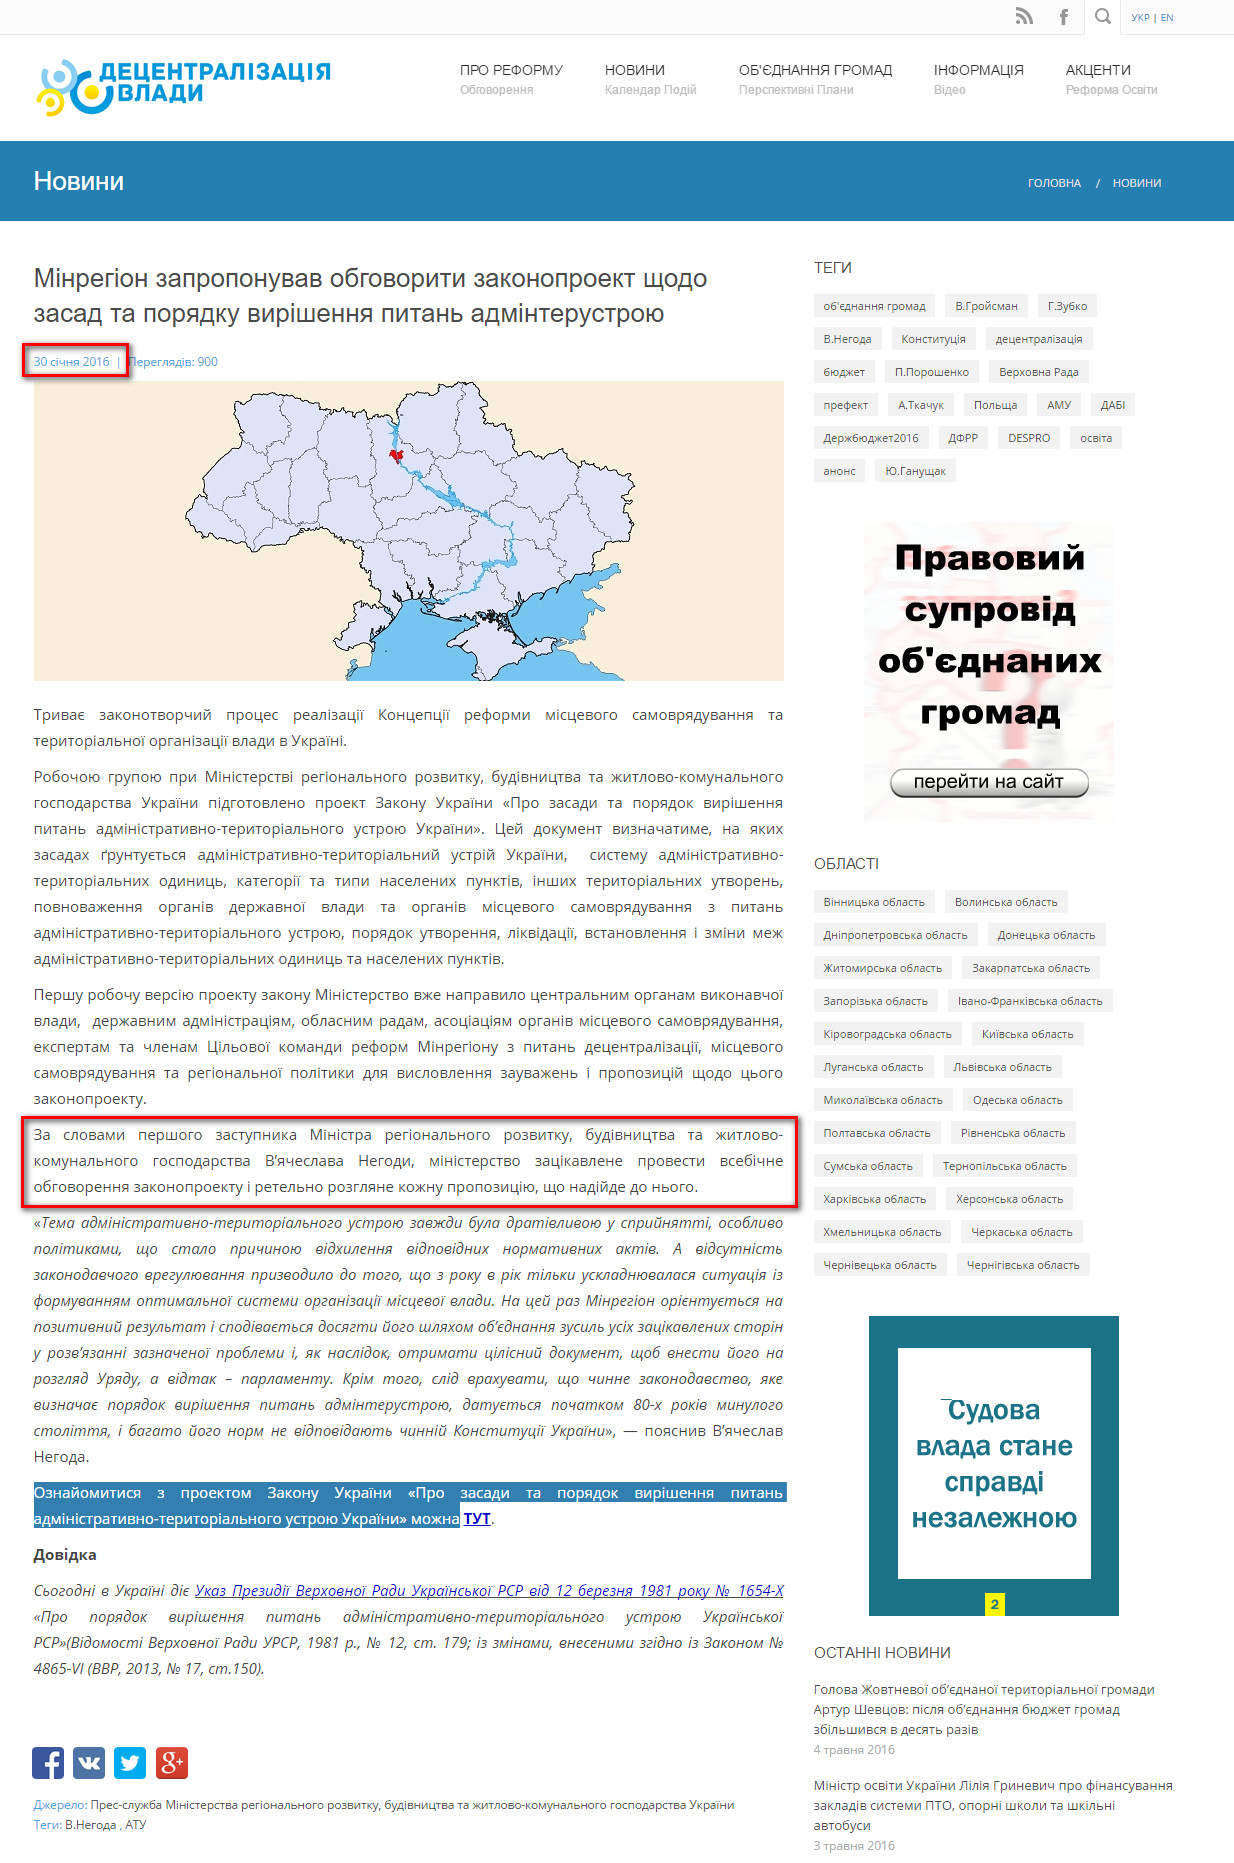 http://decentralization.gov.ua/news/item/id/1472